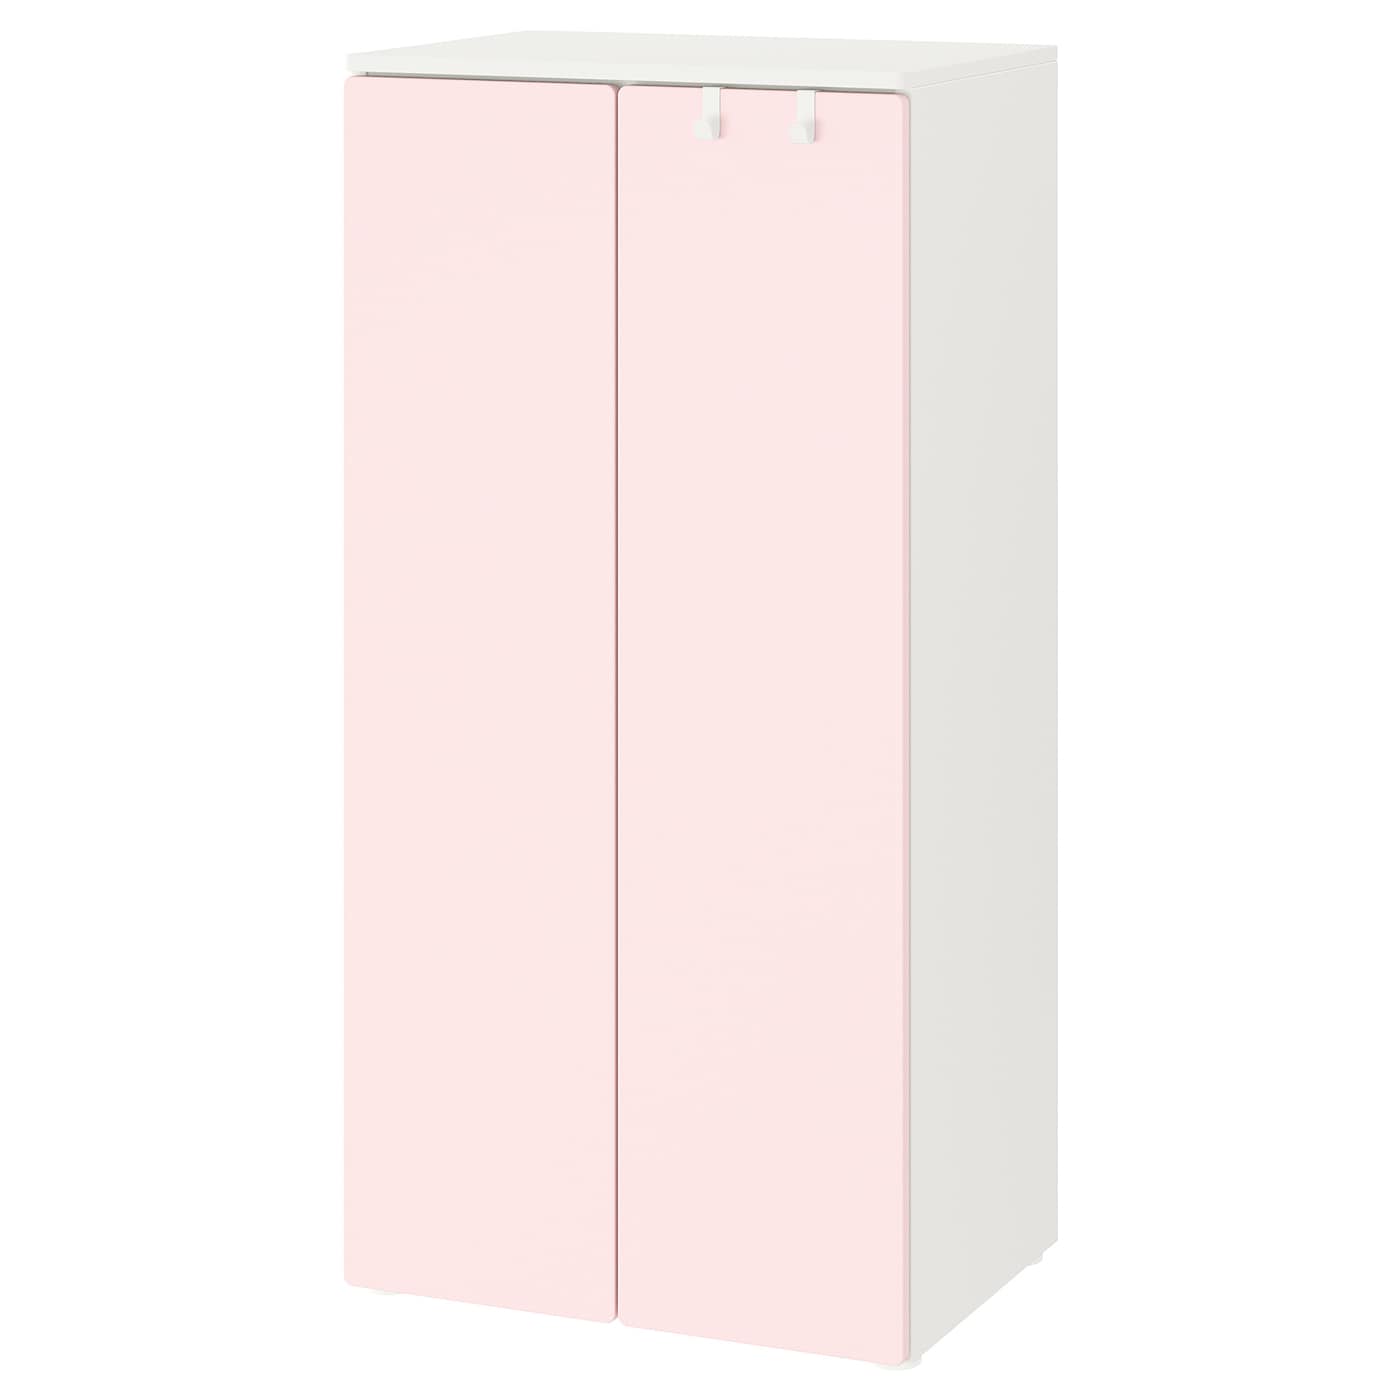 Шкаф - PLATSA/ SMÅSTAD / SMАSTAD  IKEA/ ПЛАТСА/СМОСТАД  ИКЕА, 60x40x123 см, белый/розовый